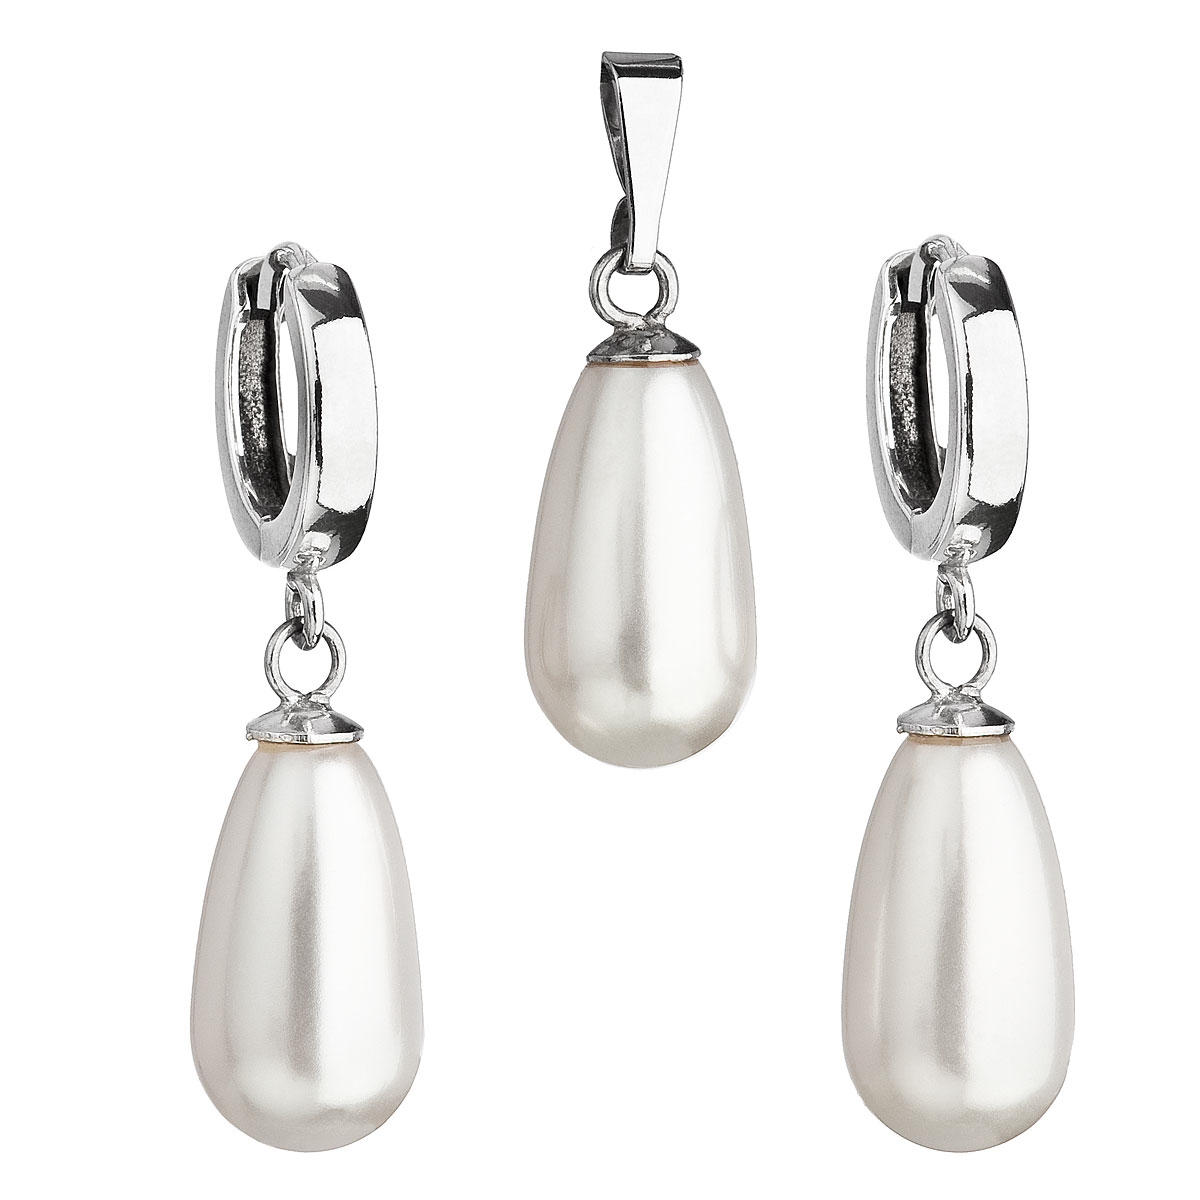 Sada šperkov s perličkami Crystals from Swarovski ®